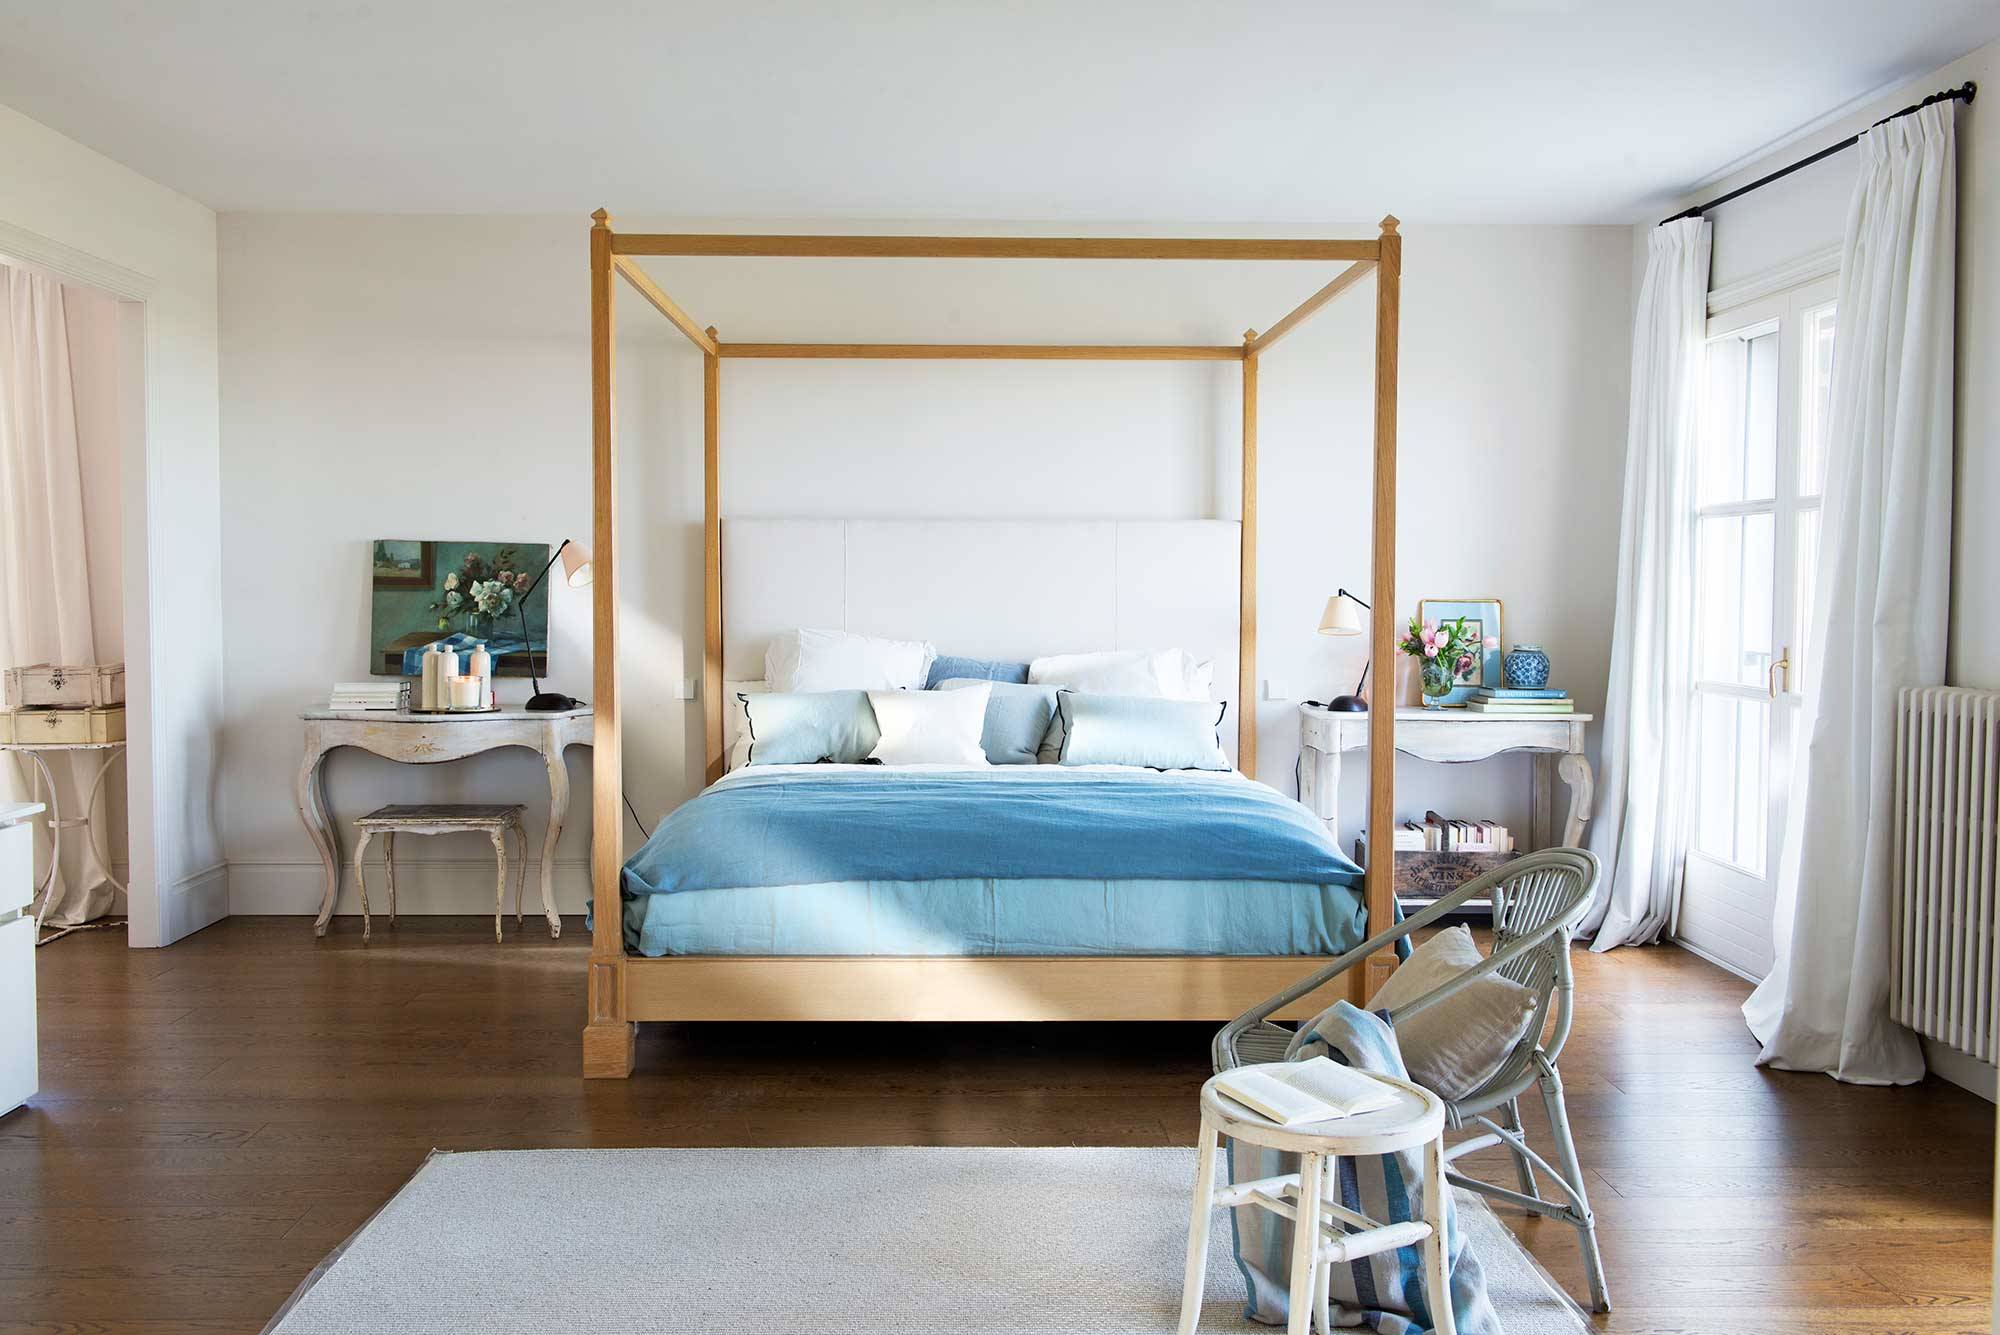 Dormitorio en blanco con cama con dosel de madera_00503725 O